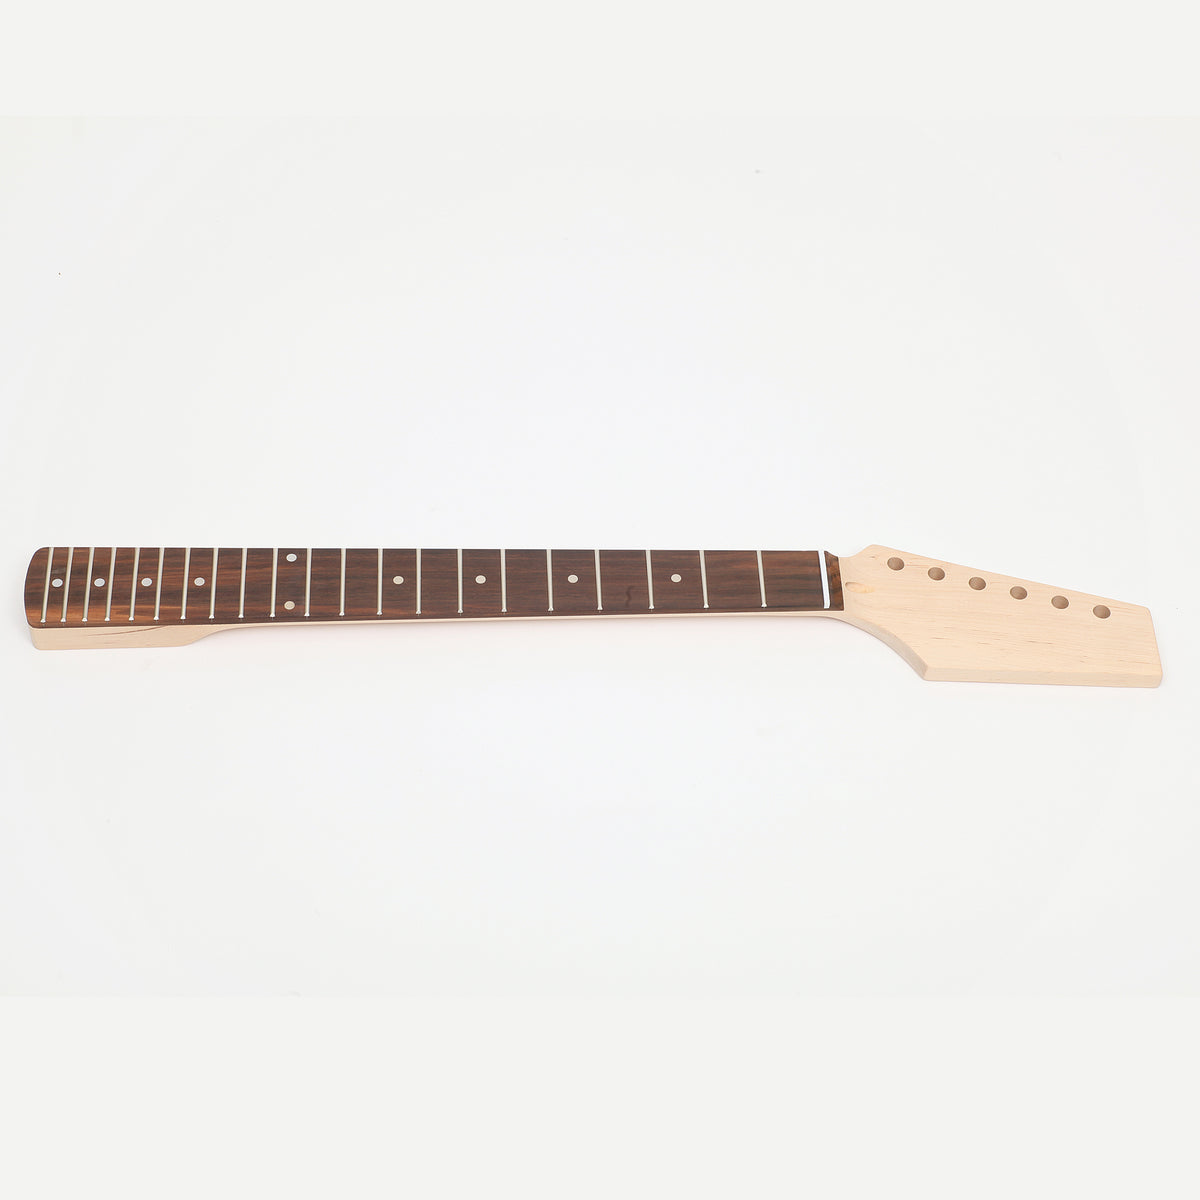 Stratocaster One DIY Guitar Kit Neck